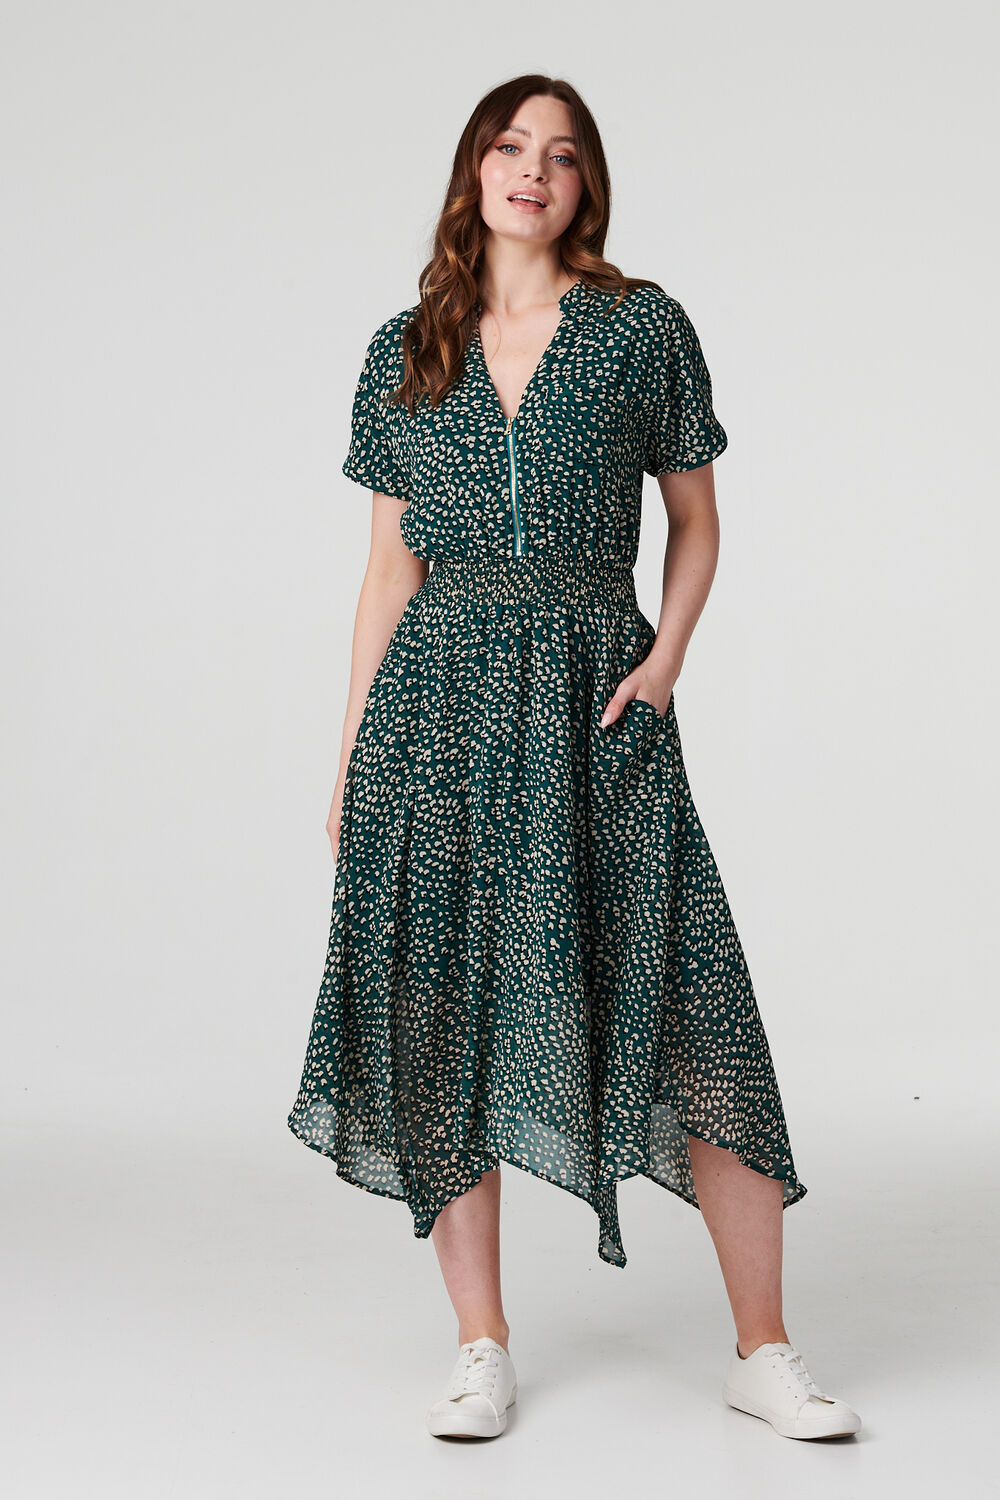 Izabel London Green - Printed Zip Front Hanky Hem Dress, Size: 16